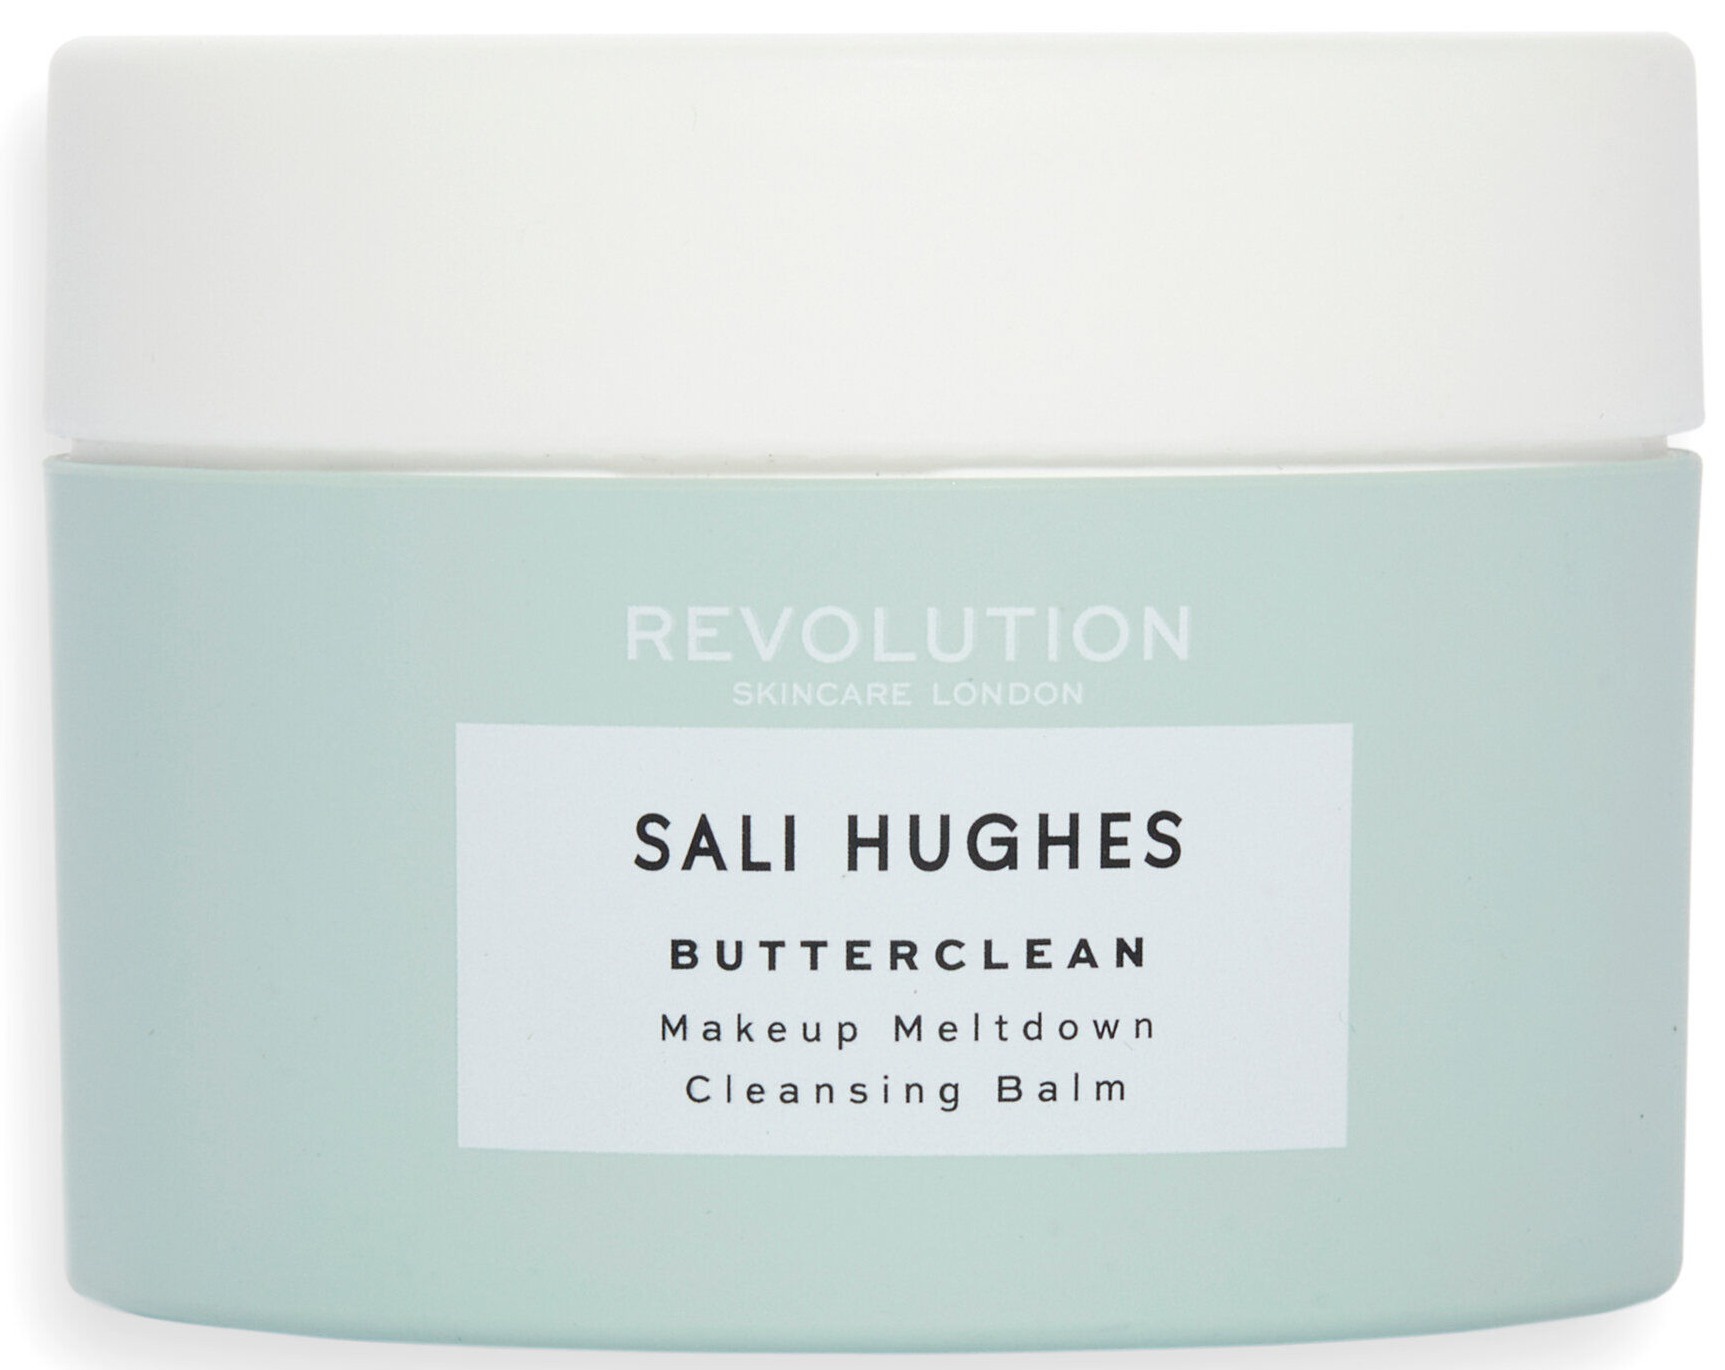 Revolution Skincare Sali Hughes Butterclean Makeup Meltdown Cleansing Balm